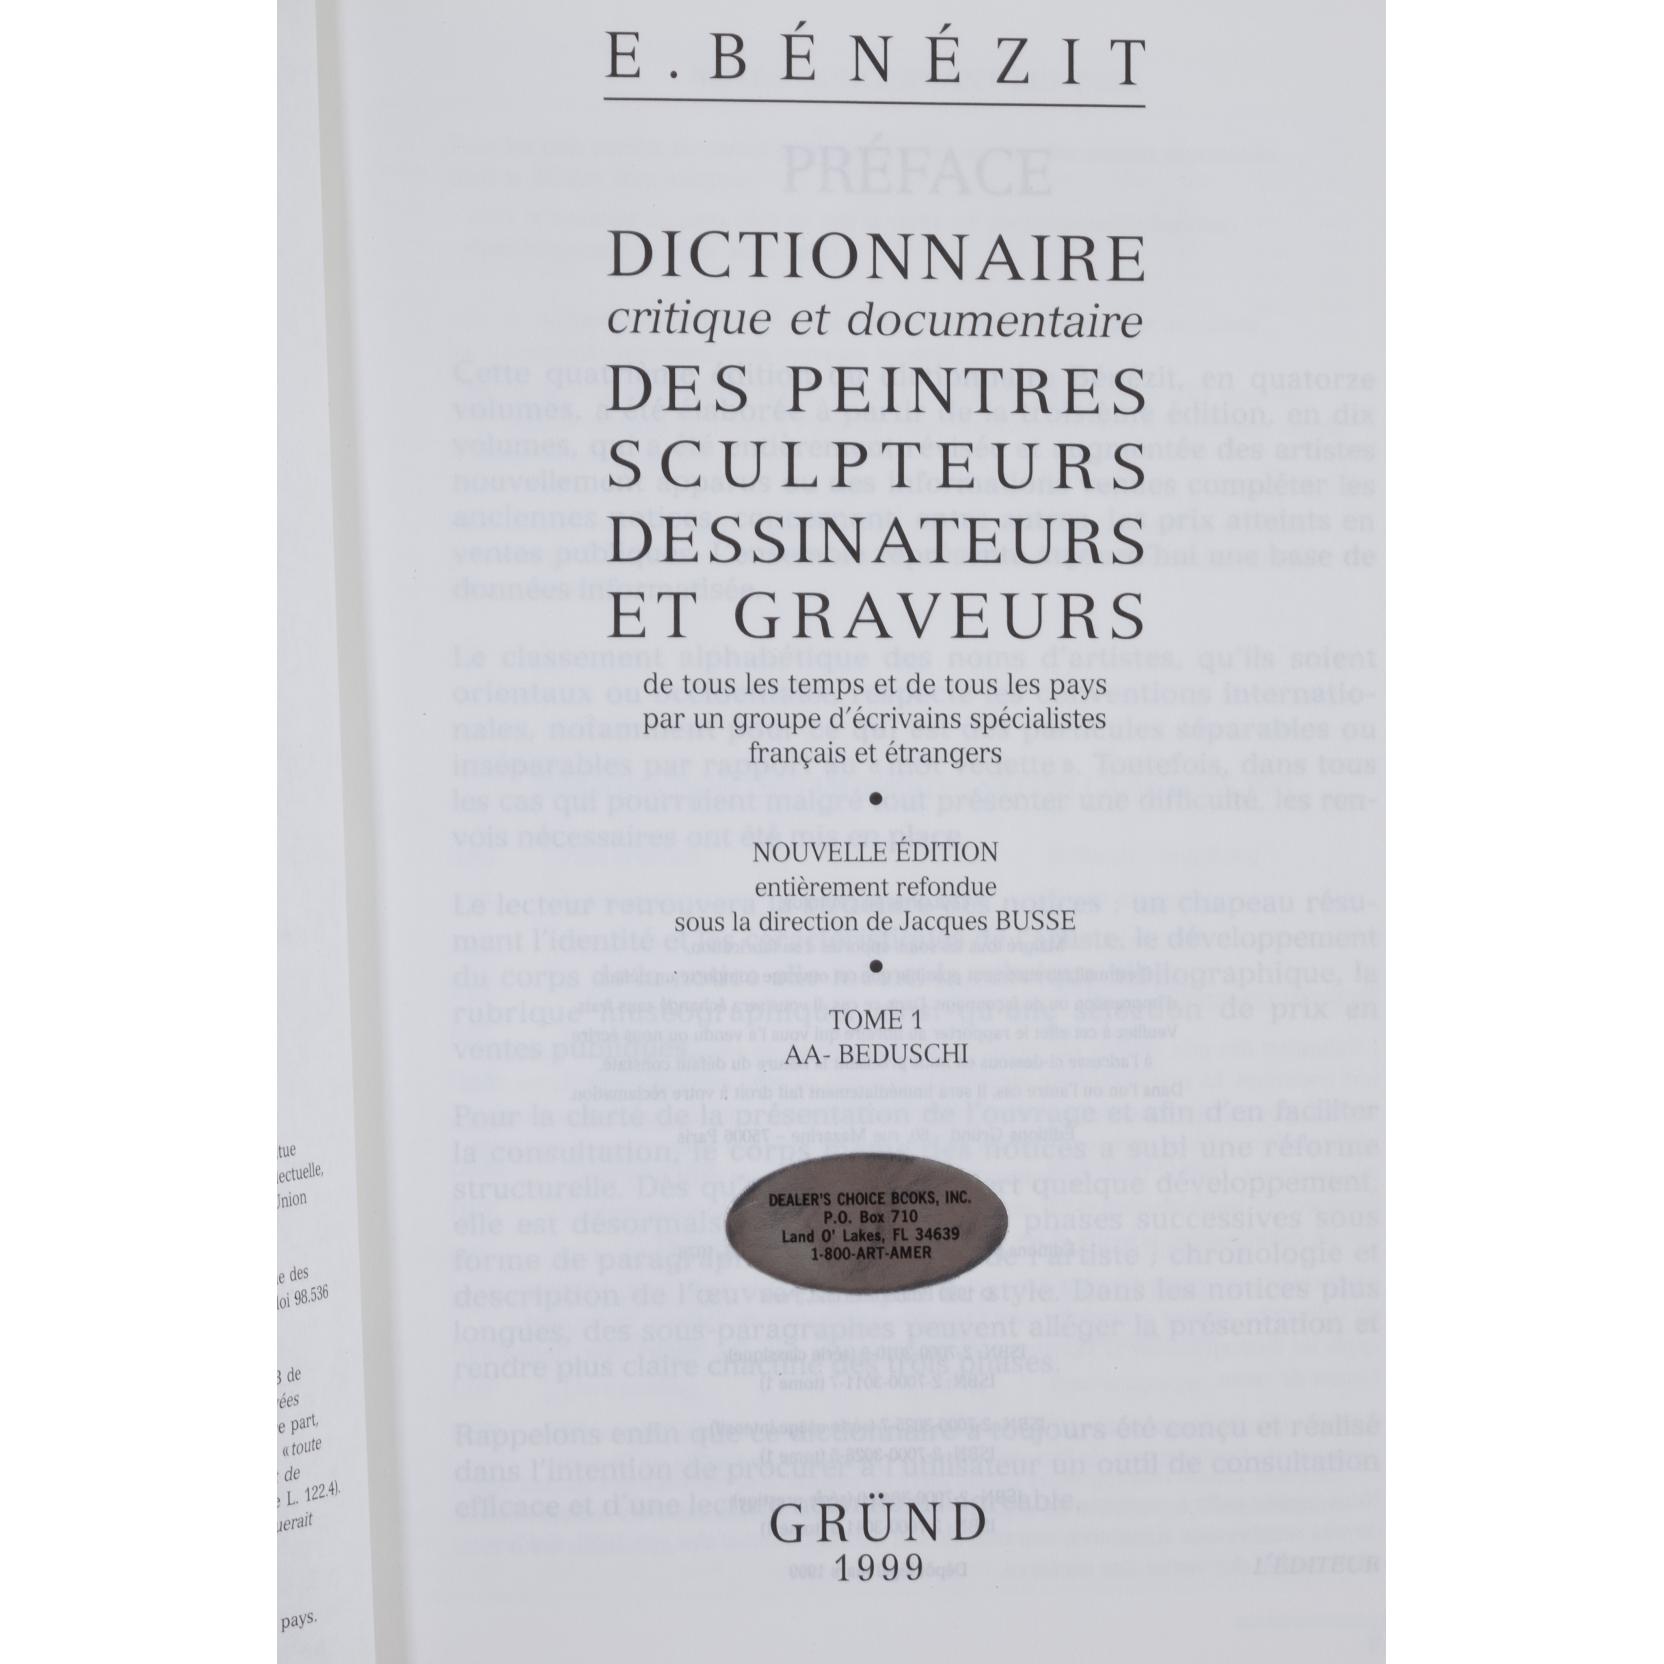 French Language Benezit Dictionary Of Artists Lot 442 Fine Amp Decorative Arts Auctionsep 17 11 10 00am